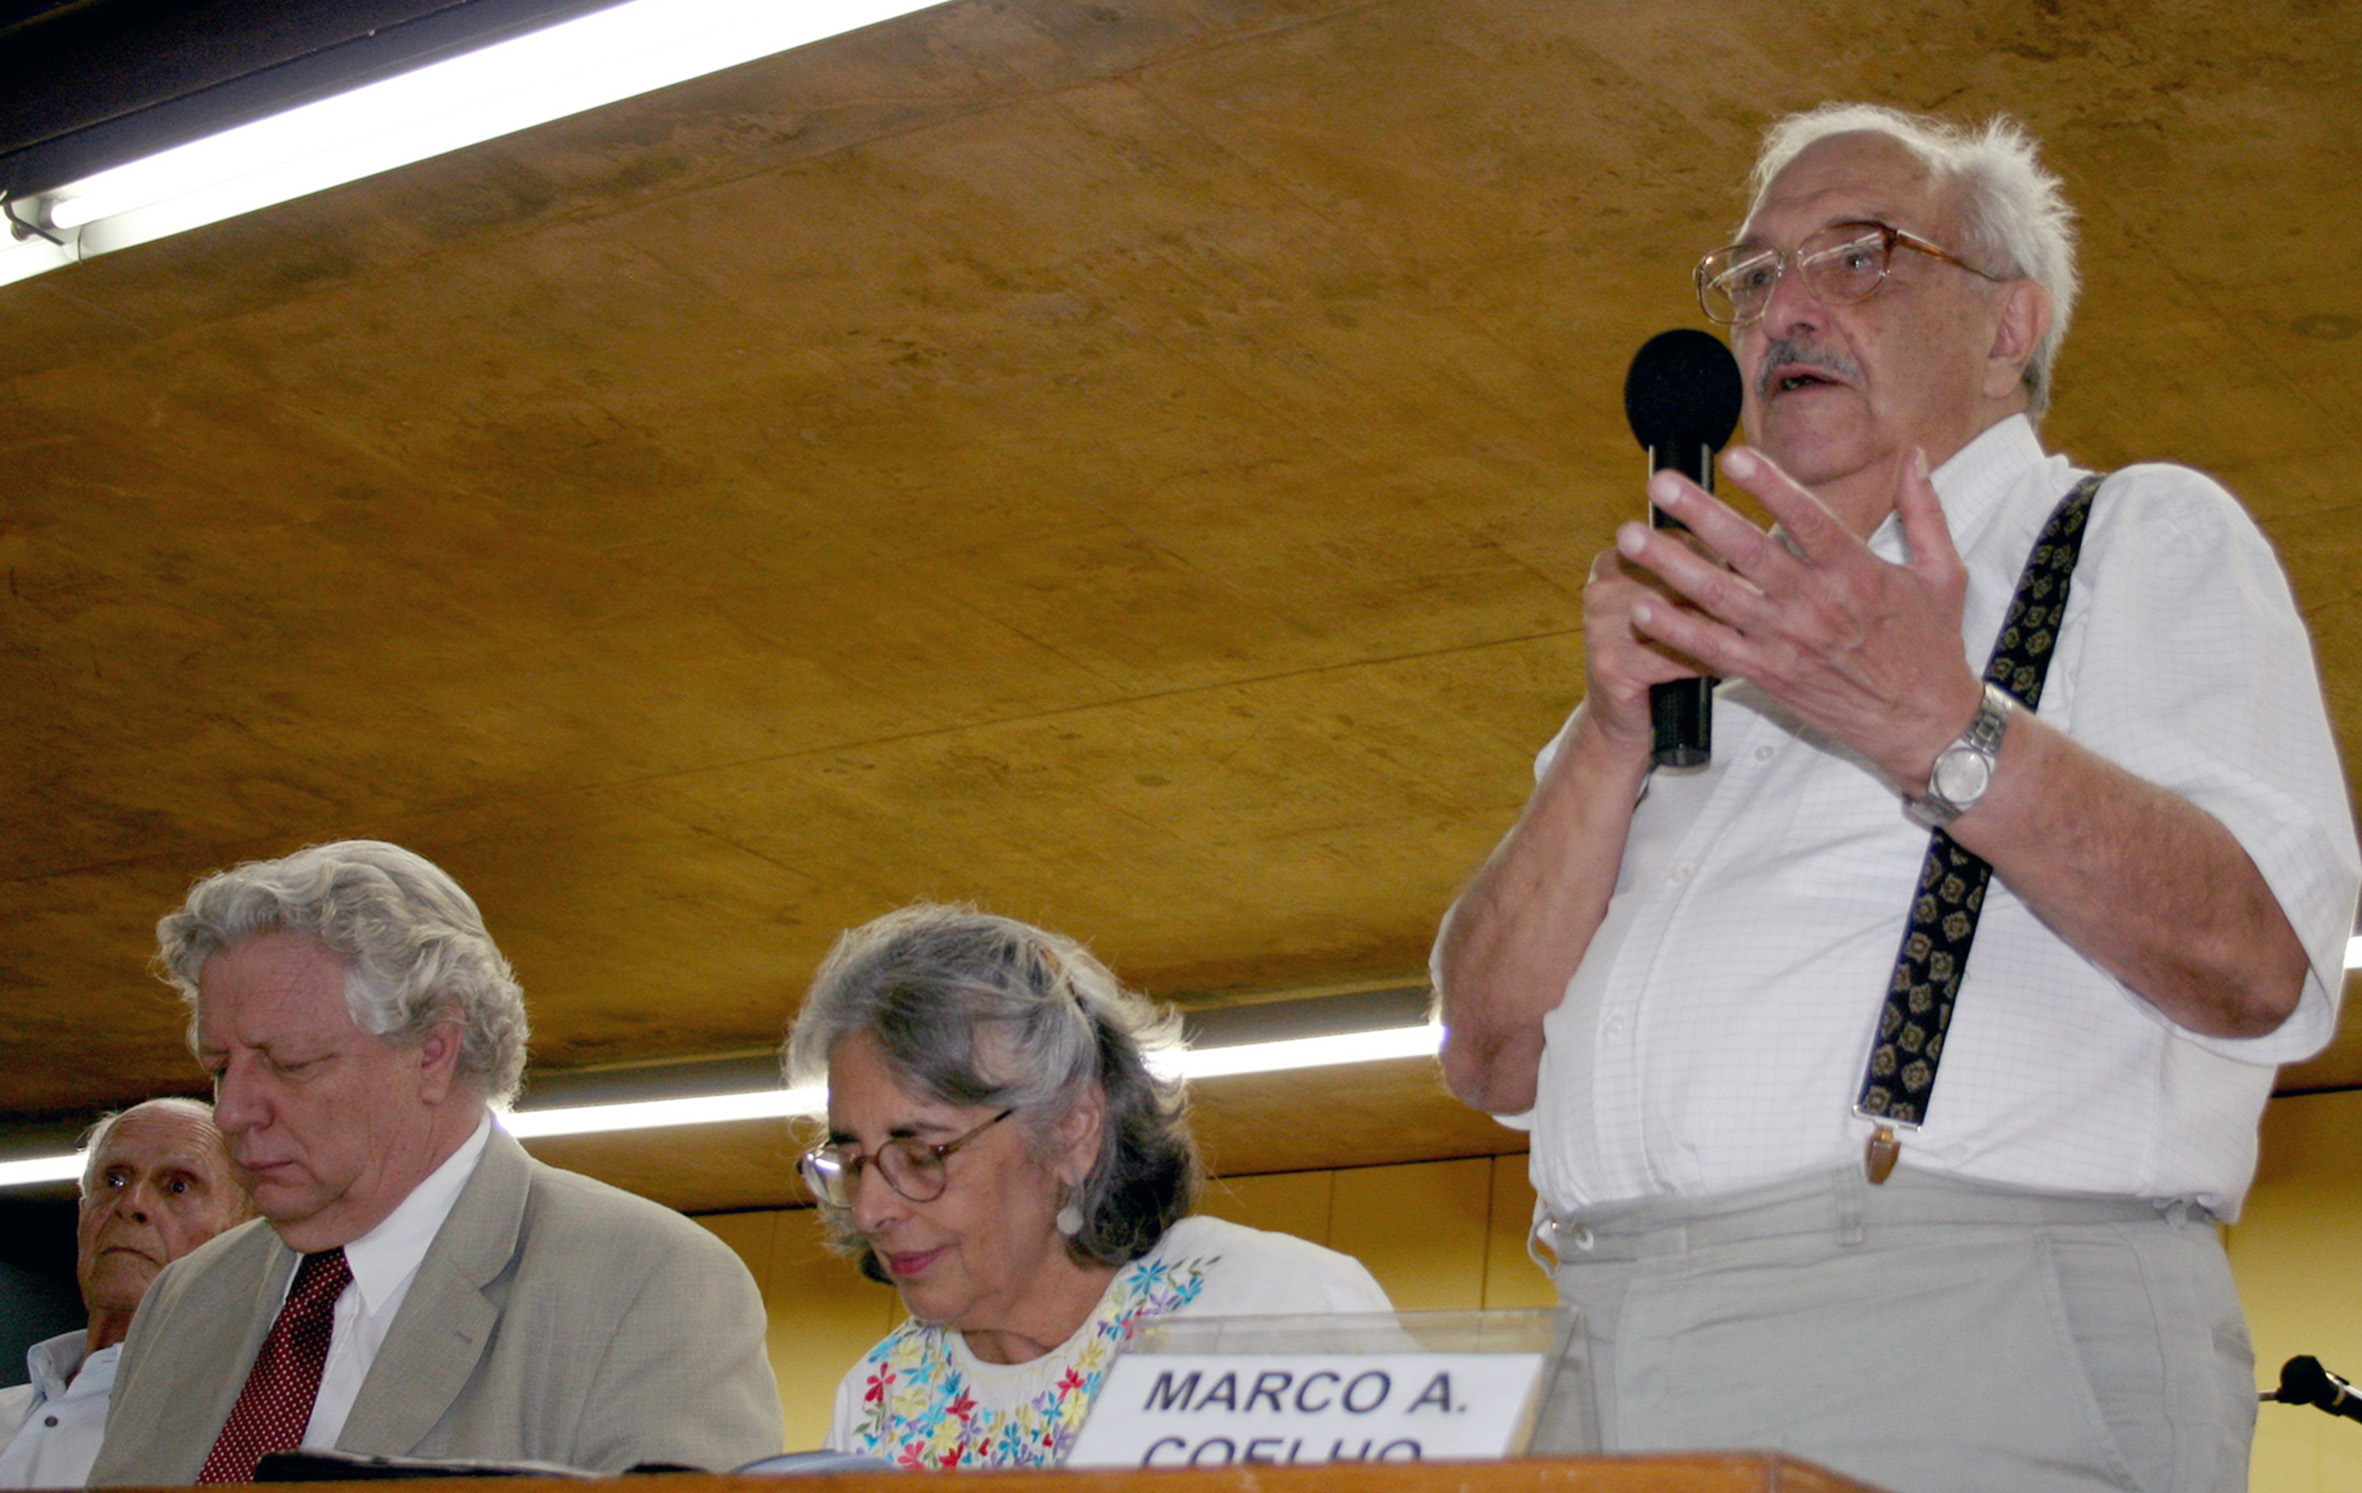 Francisco Papaterra Limongi Neto, João Steiner, Ecléa Bosi e Marco Antonio Coelho